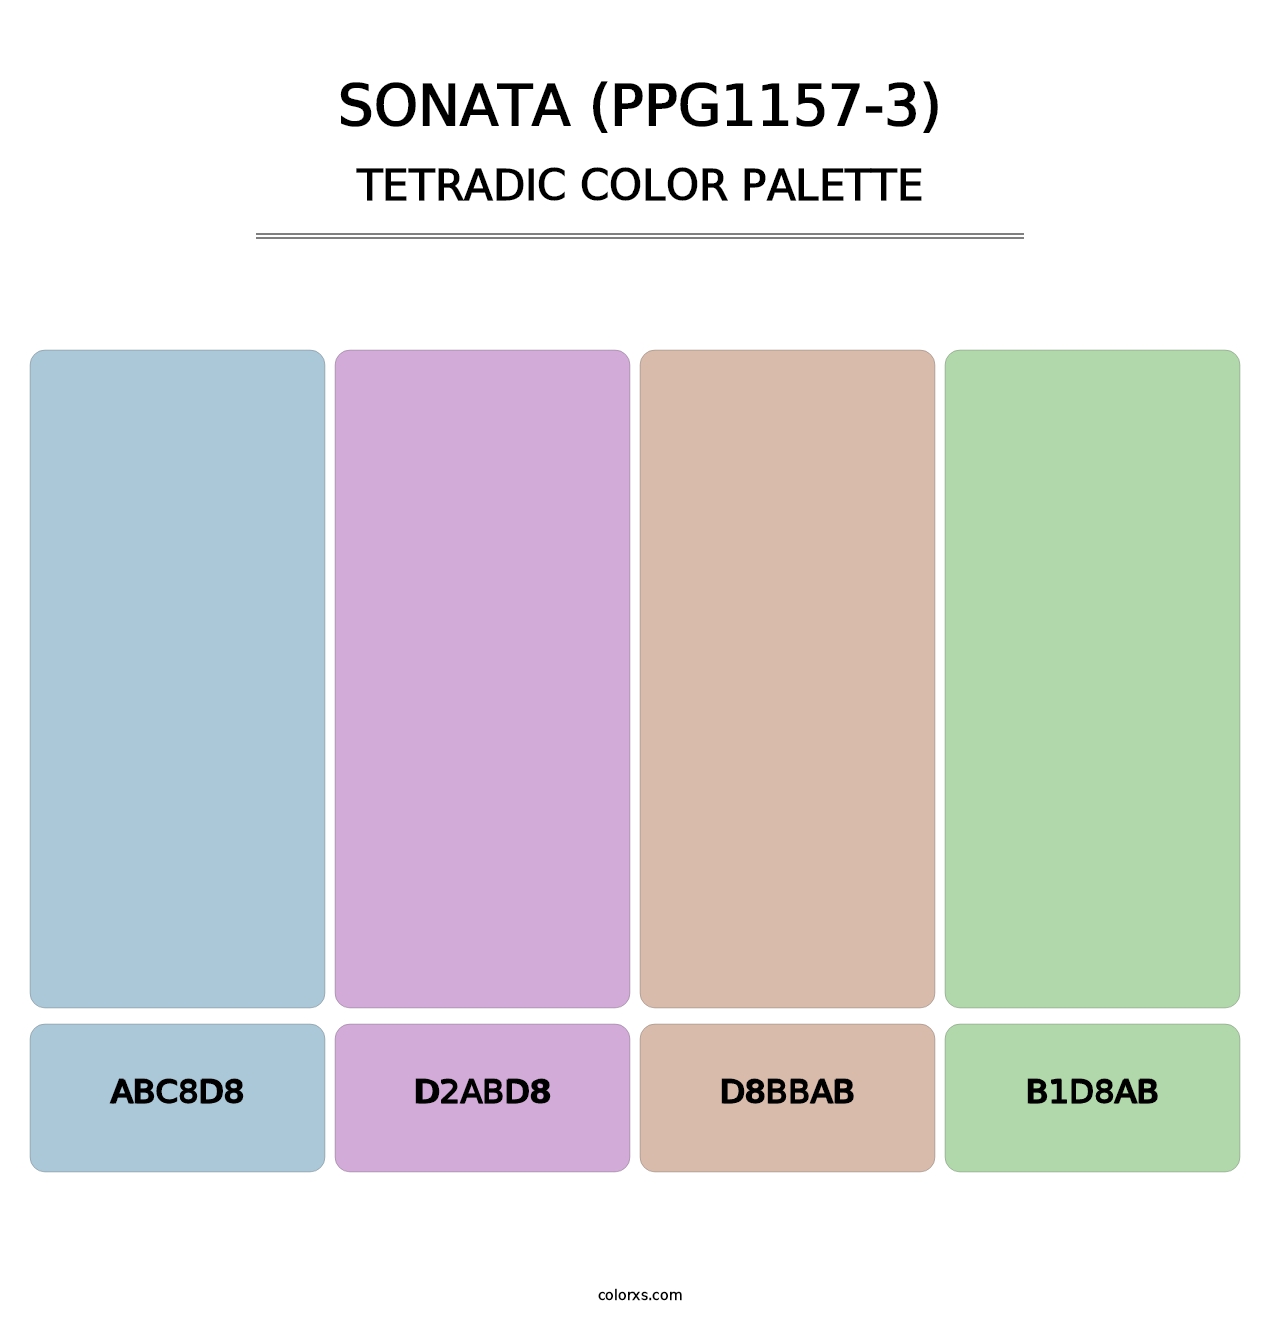 Sonata (PPG1157-3) - Tetradic Color Palette